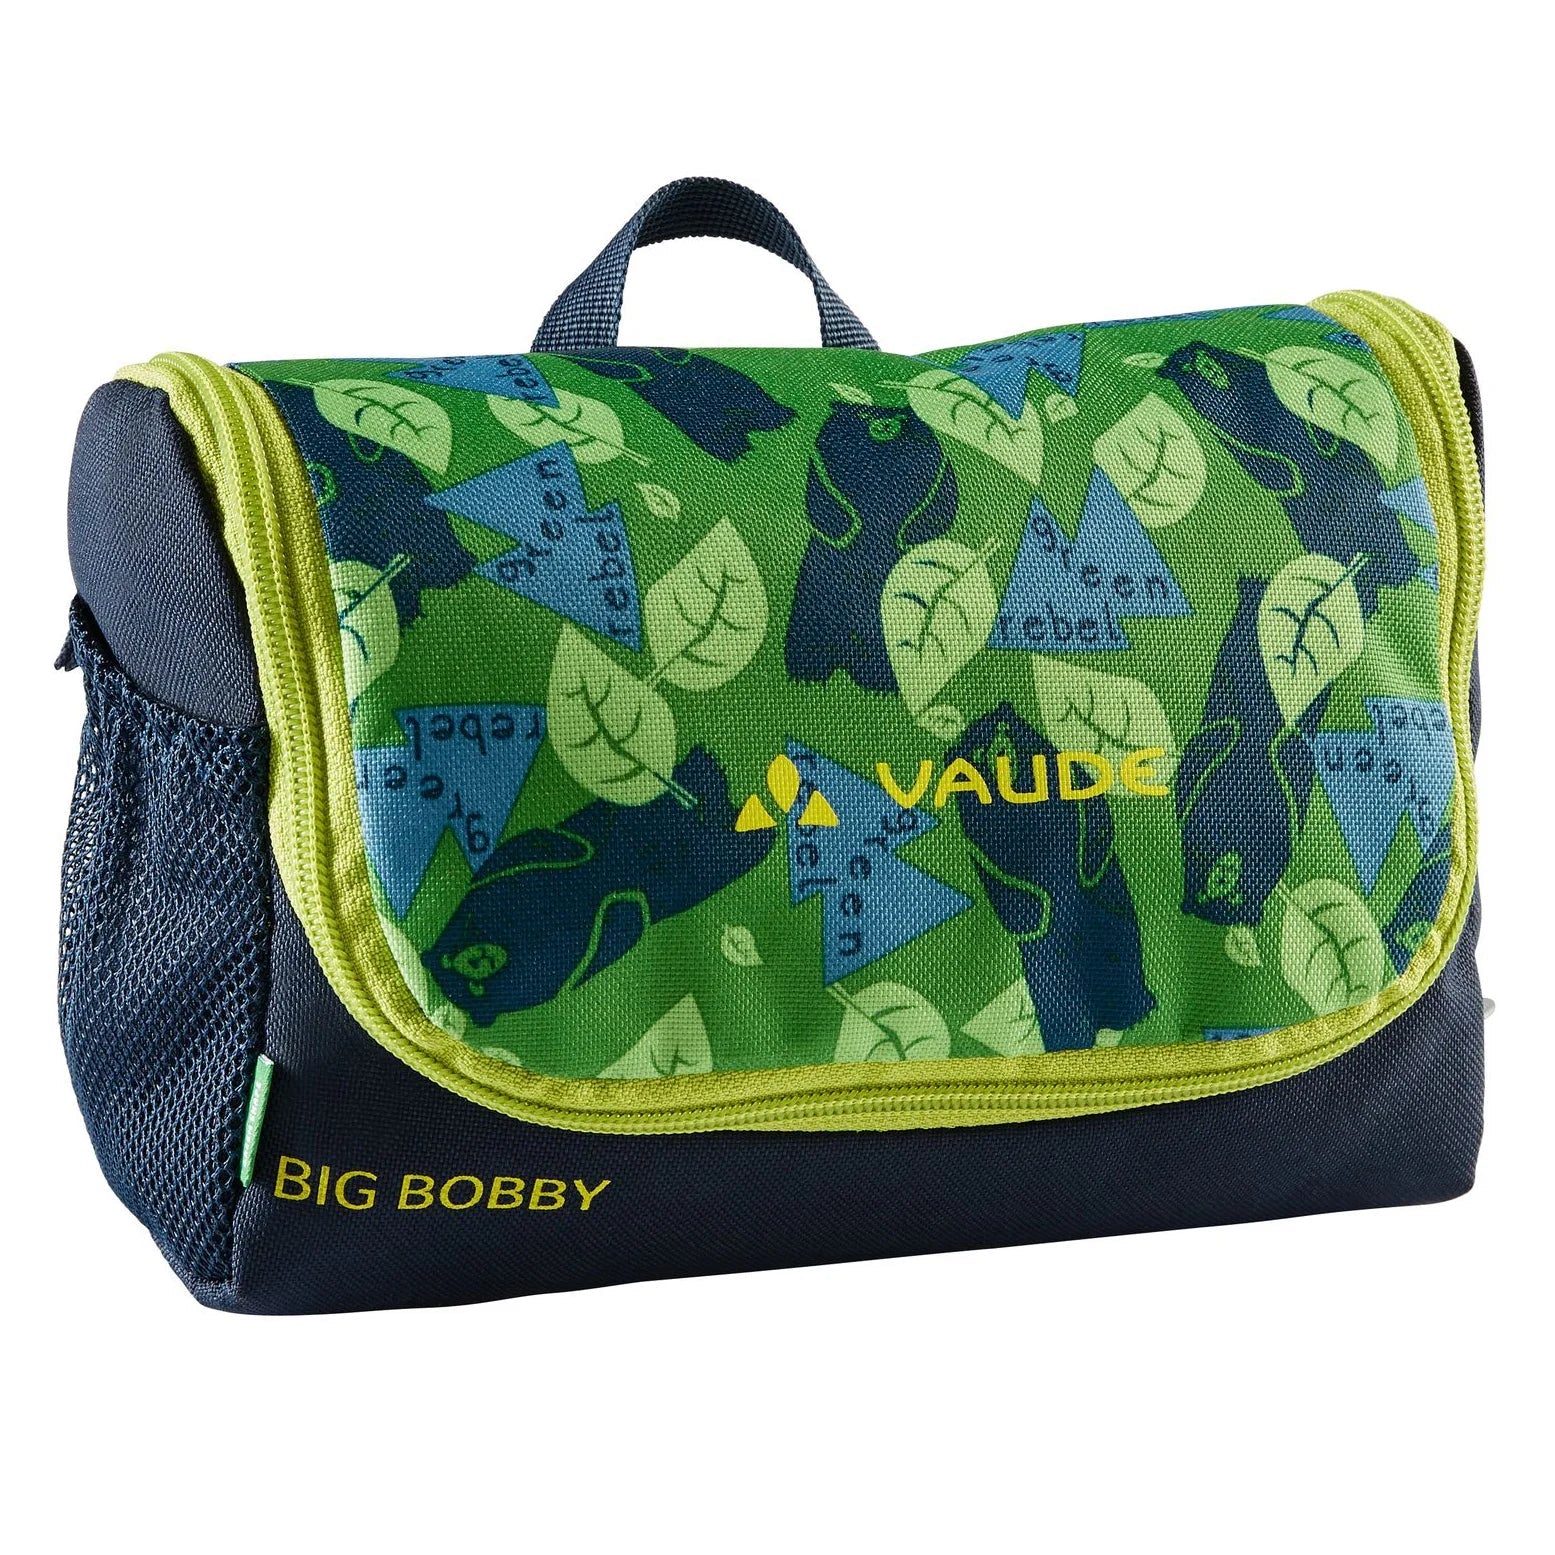 Vaude Family Big Bobby kids toiletry bag 21 cm - parrot green-eclipse